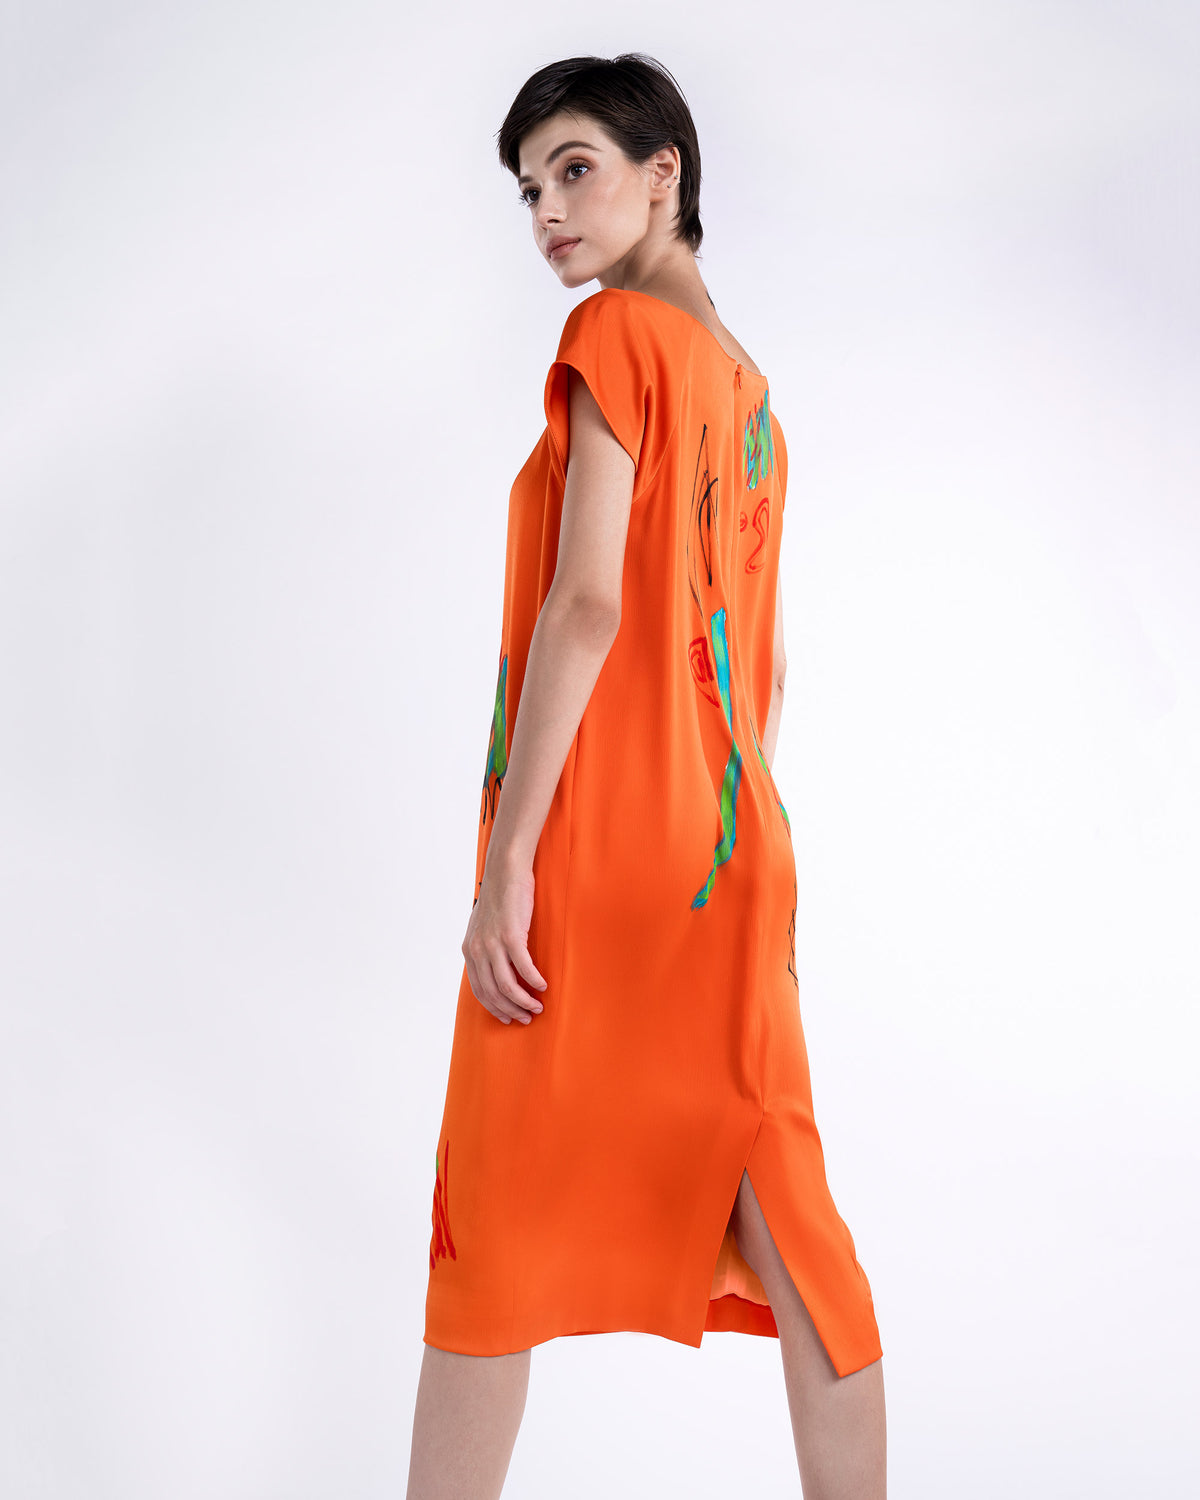 Spontaneous - Orange Cocoon Dress